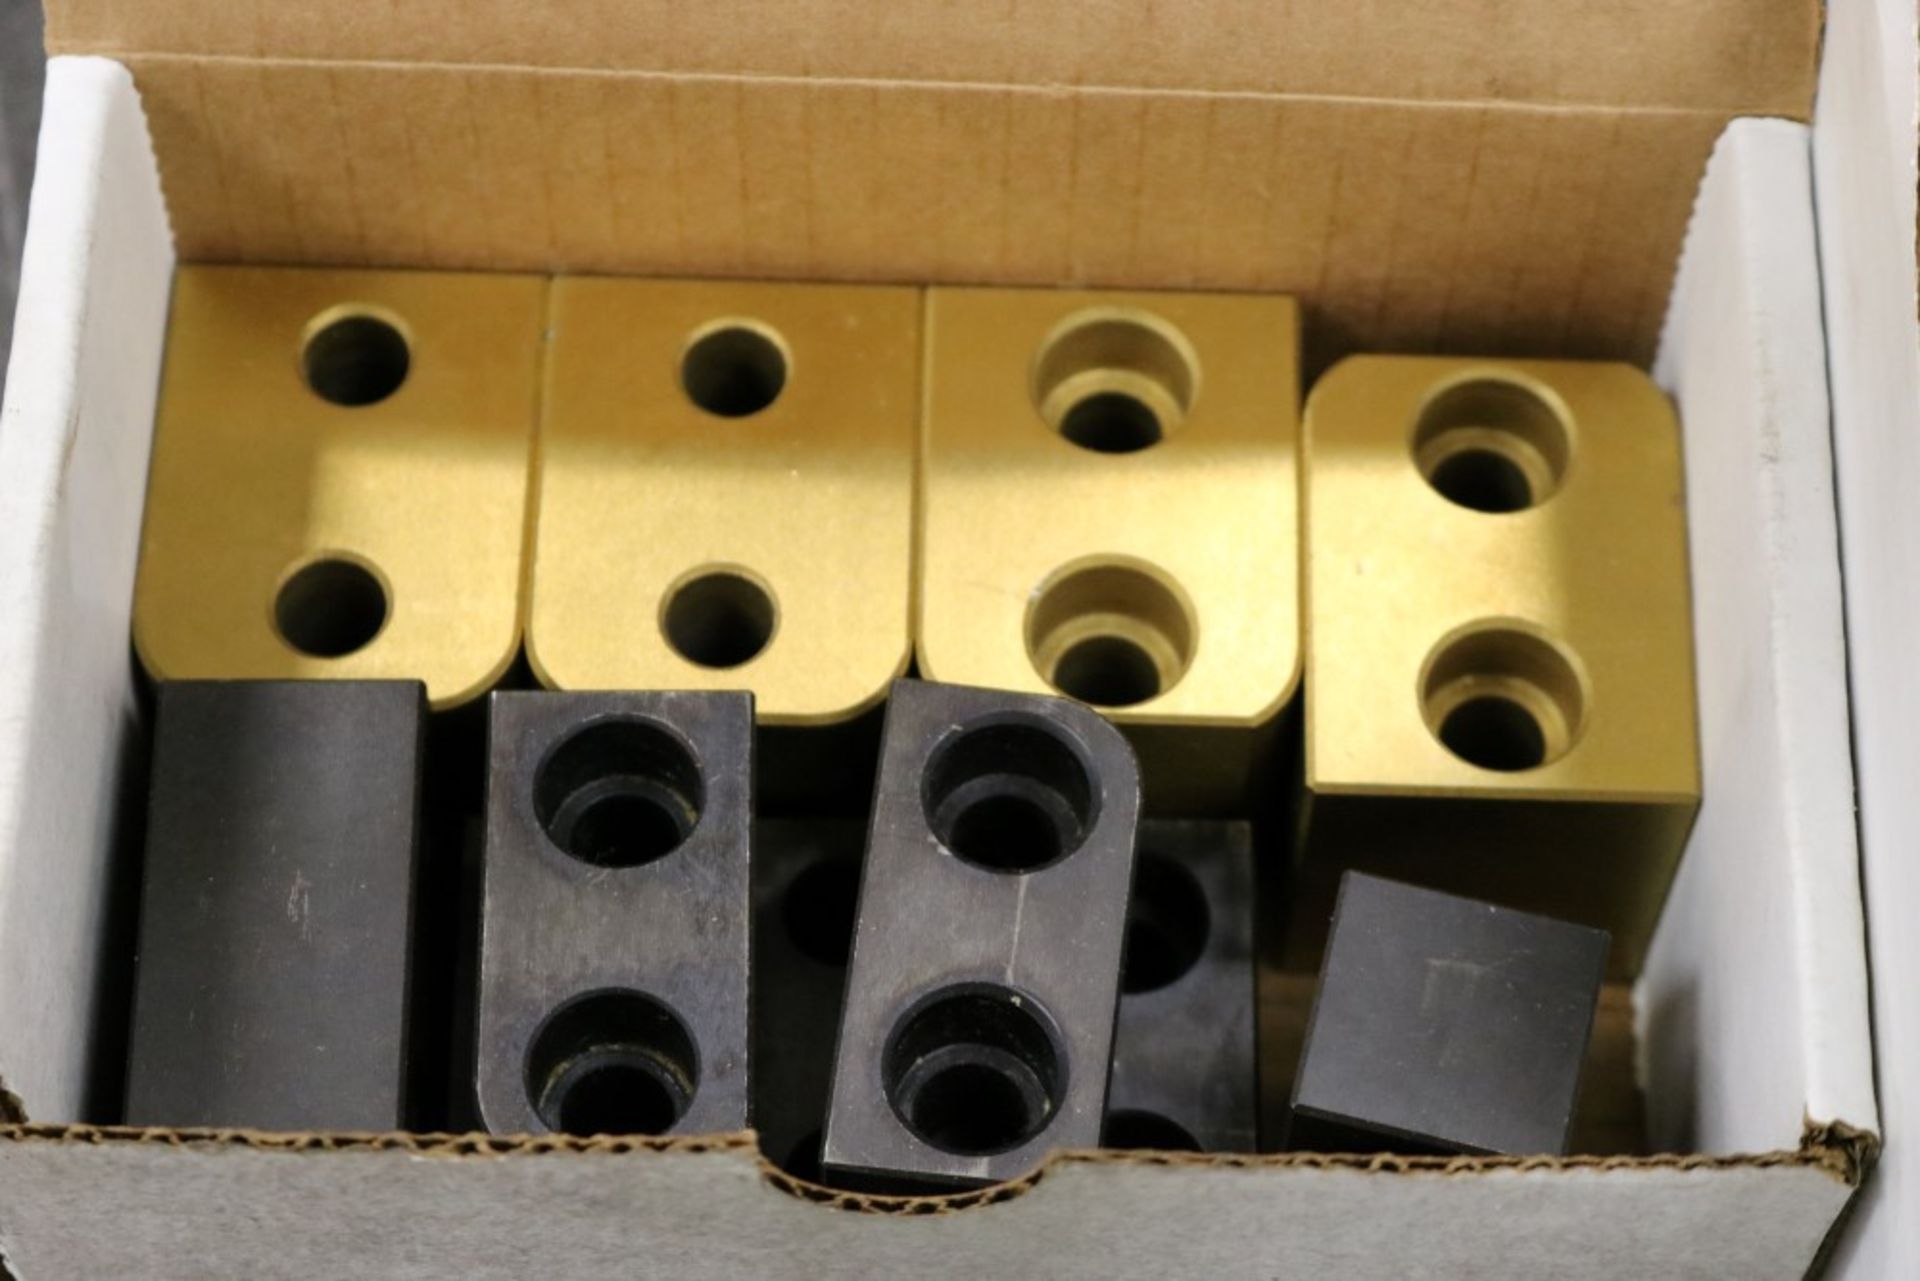 Box of New Various Sized Progressive Parting Line Locks - Image 3 of 4